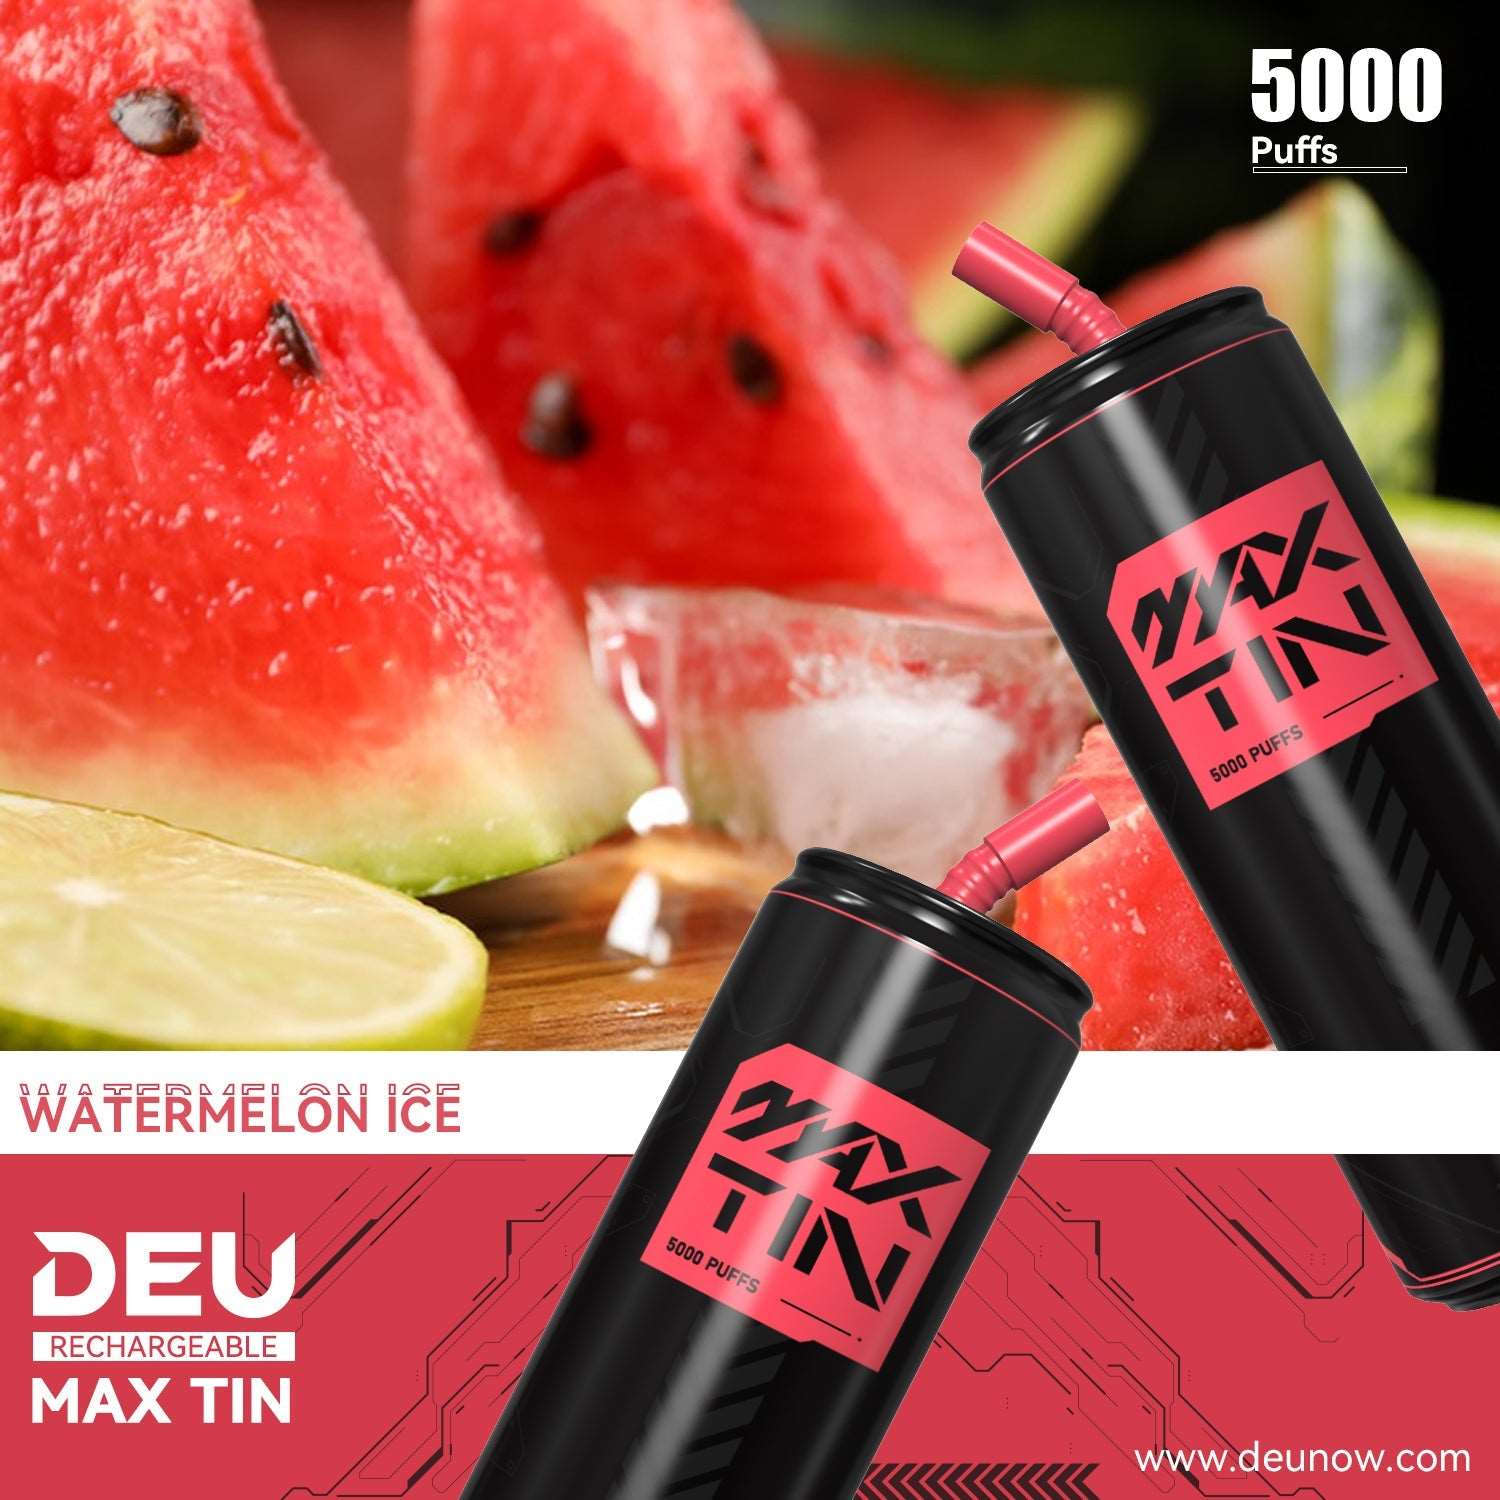 DEU MAX TIN - Watermelon Ice